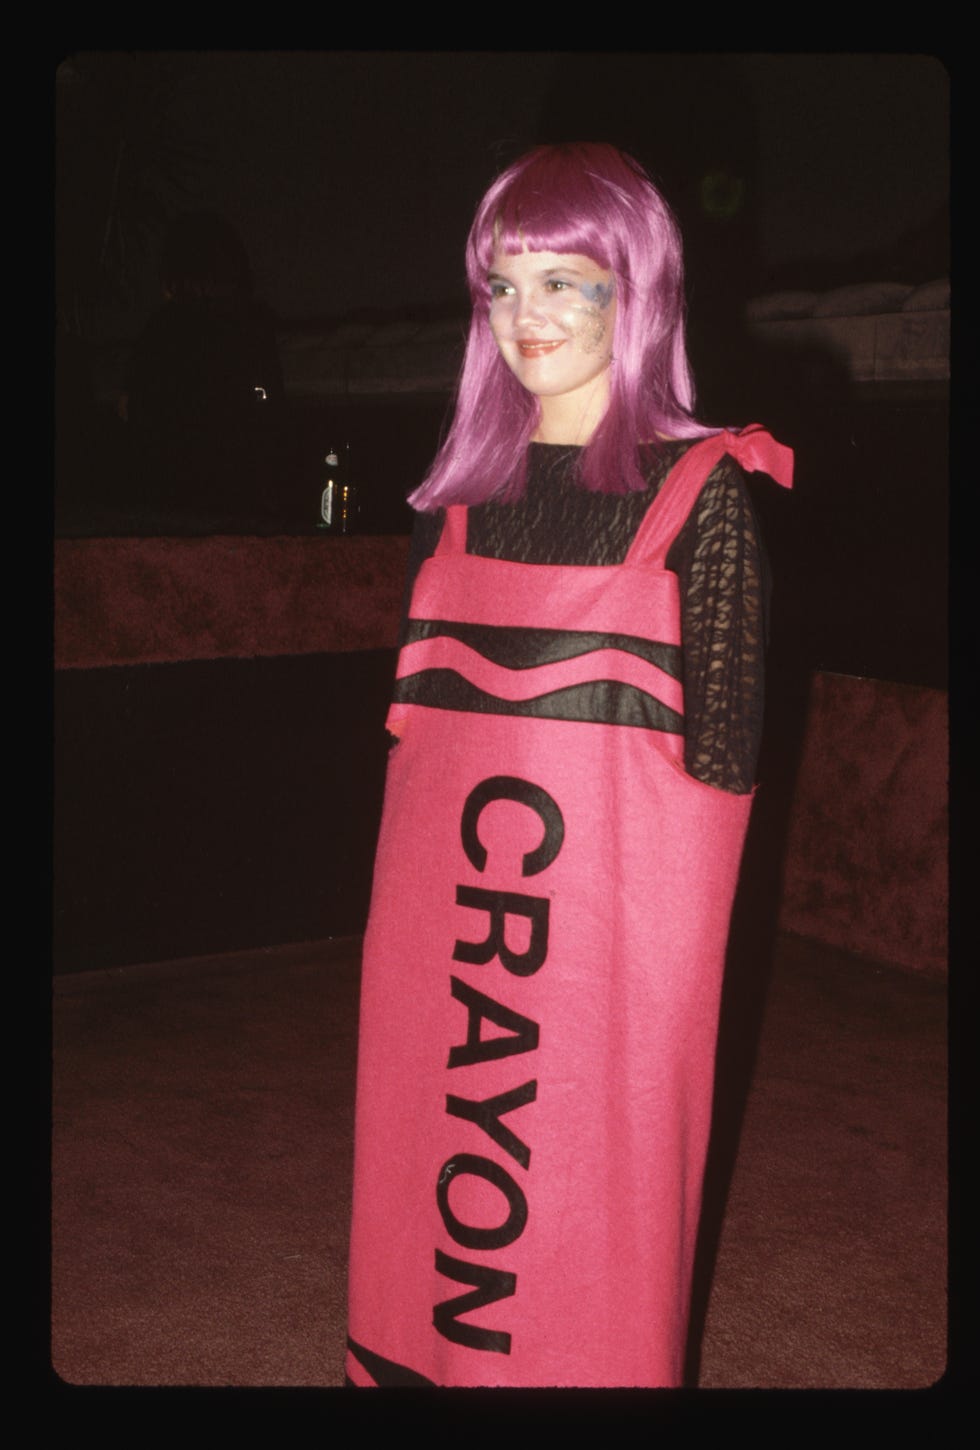 Drew Barrymore Wearing Pink Crayon Costume